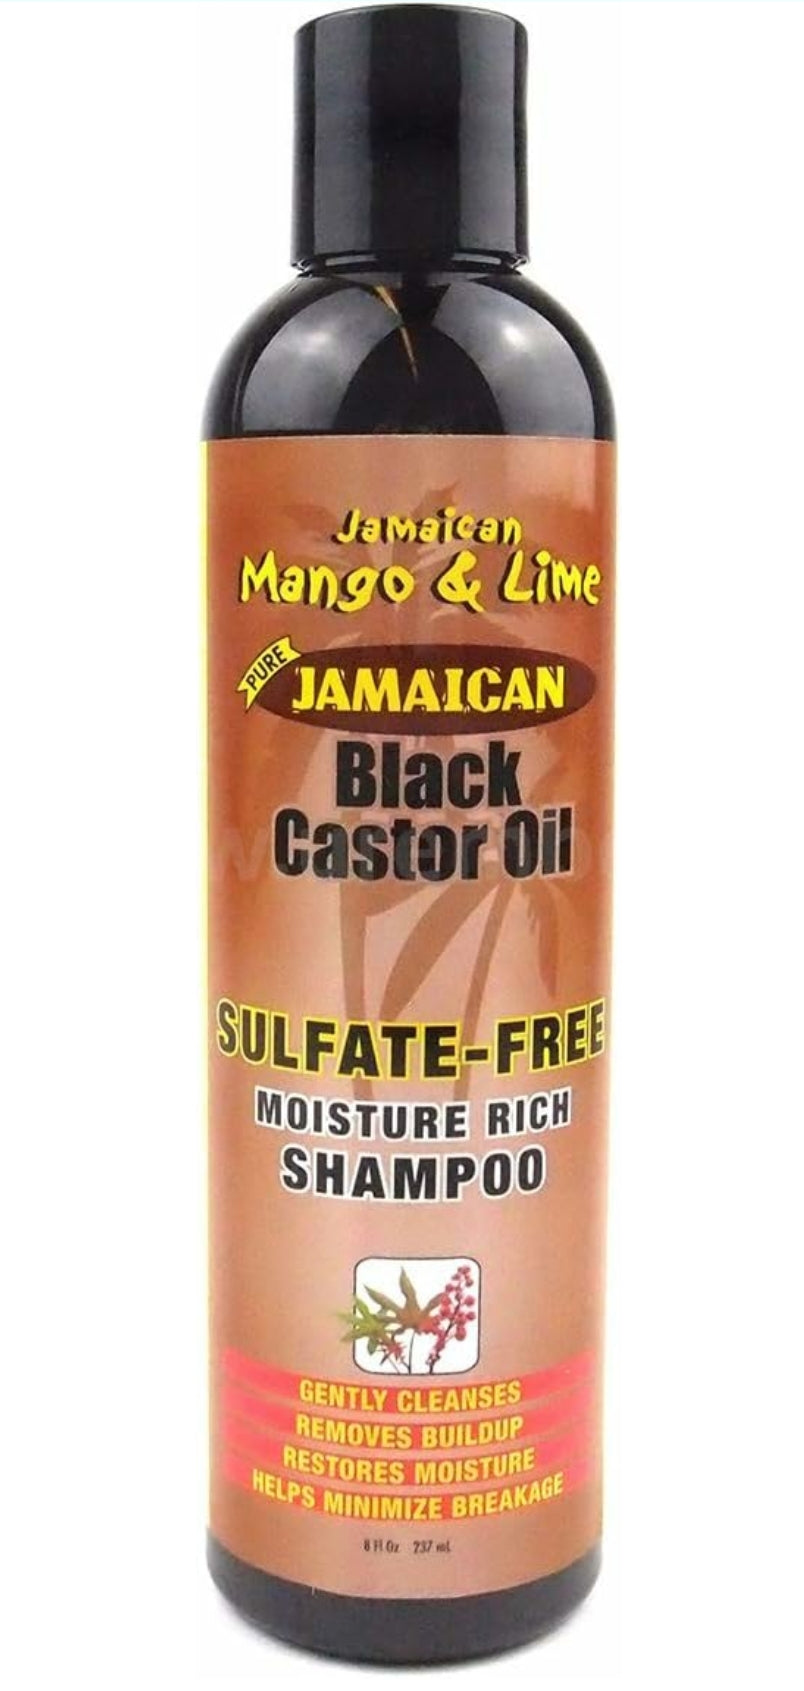 JAMAICAN MANGO & LIME- JAMAICAN BLACK CASTOR OIL SHAMPOO